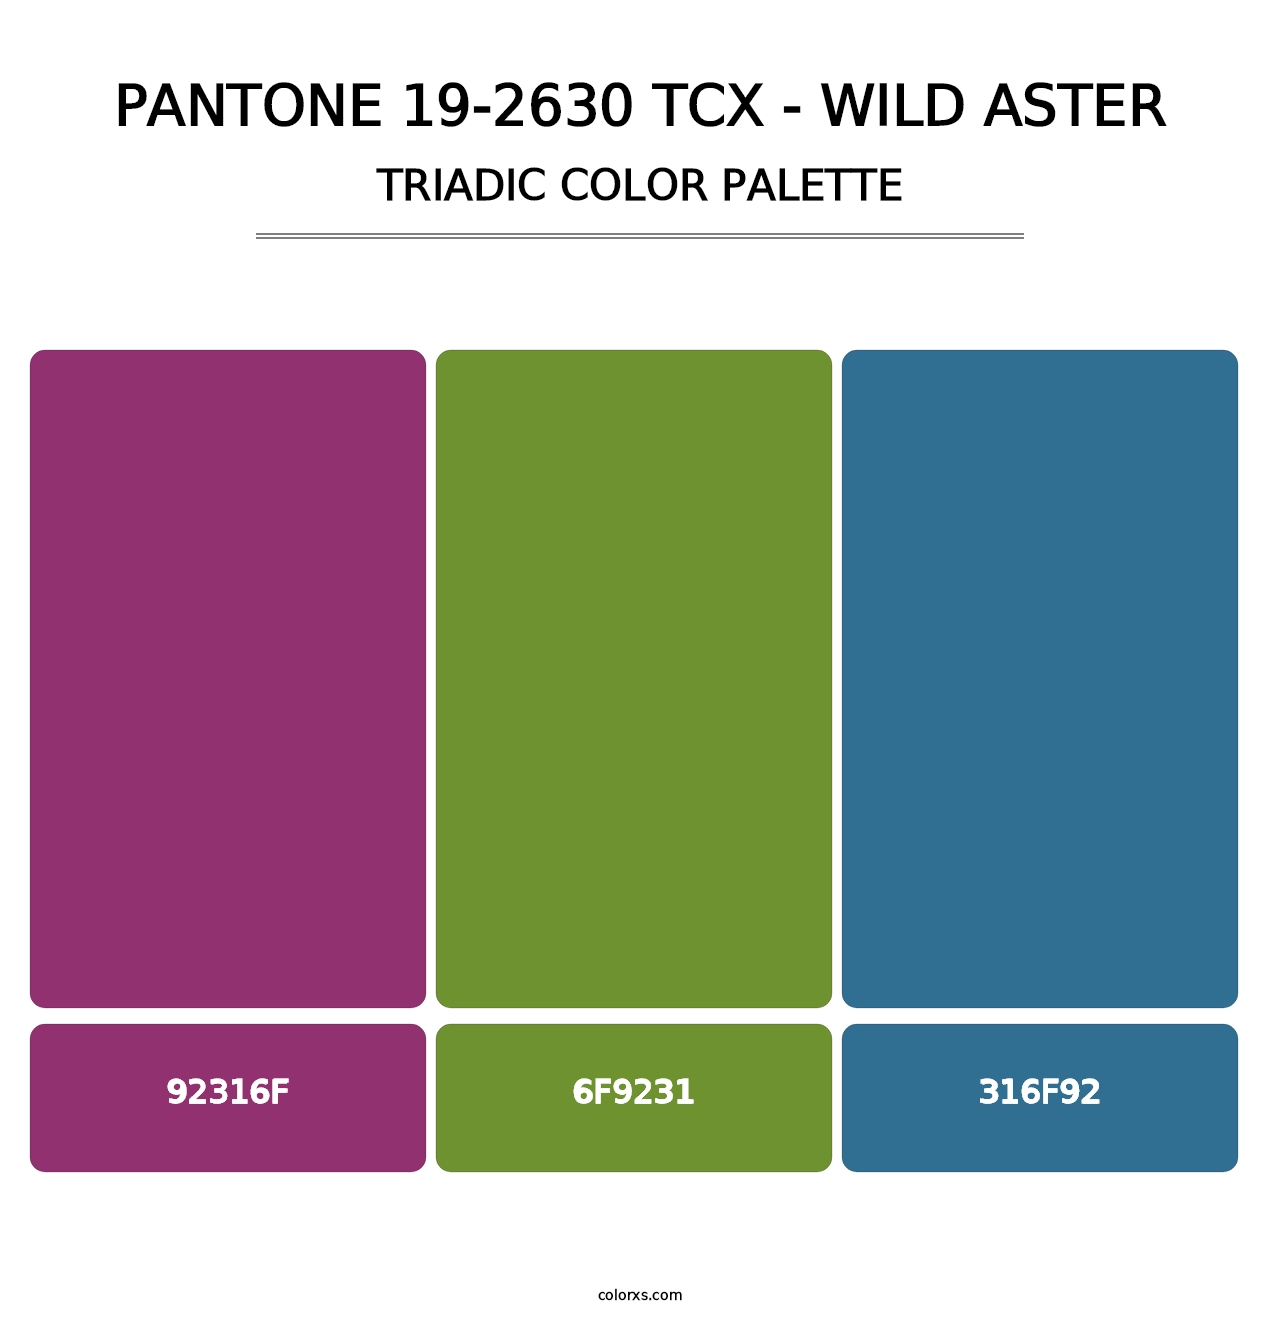 PANTONE 19-2630 TCX - Wild Aster - Triadic Color Palette